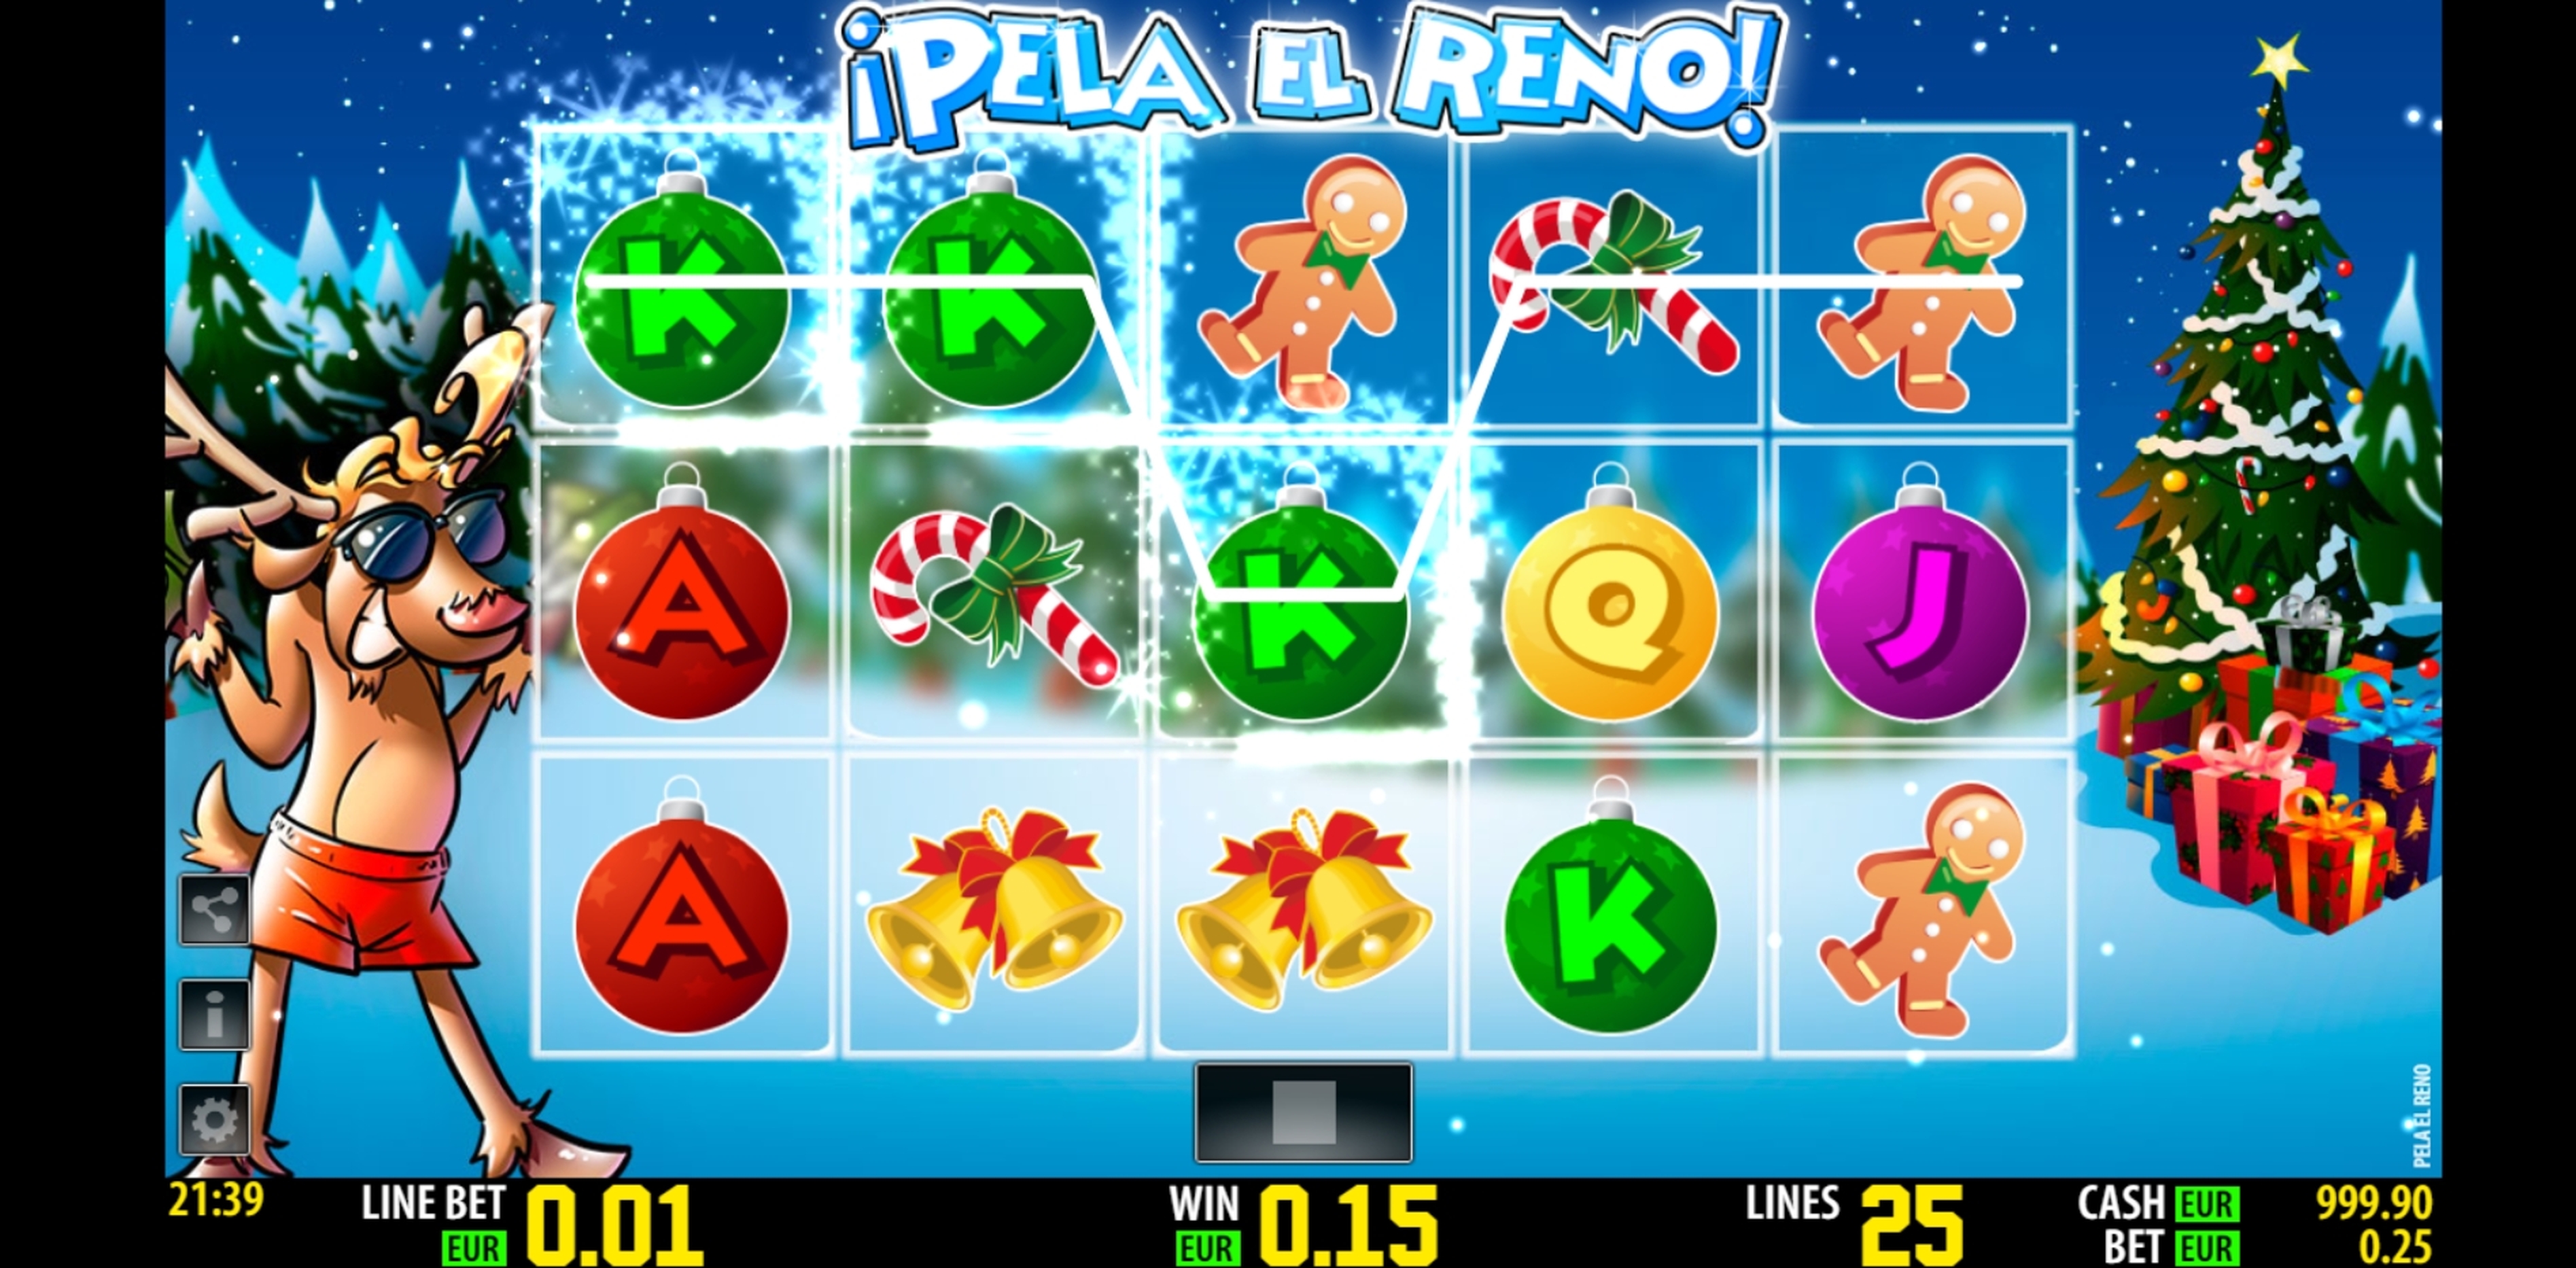 Win Money in Pela El Reno Free Slot Game by World Match